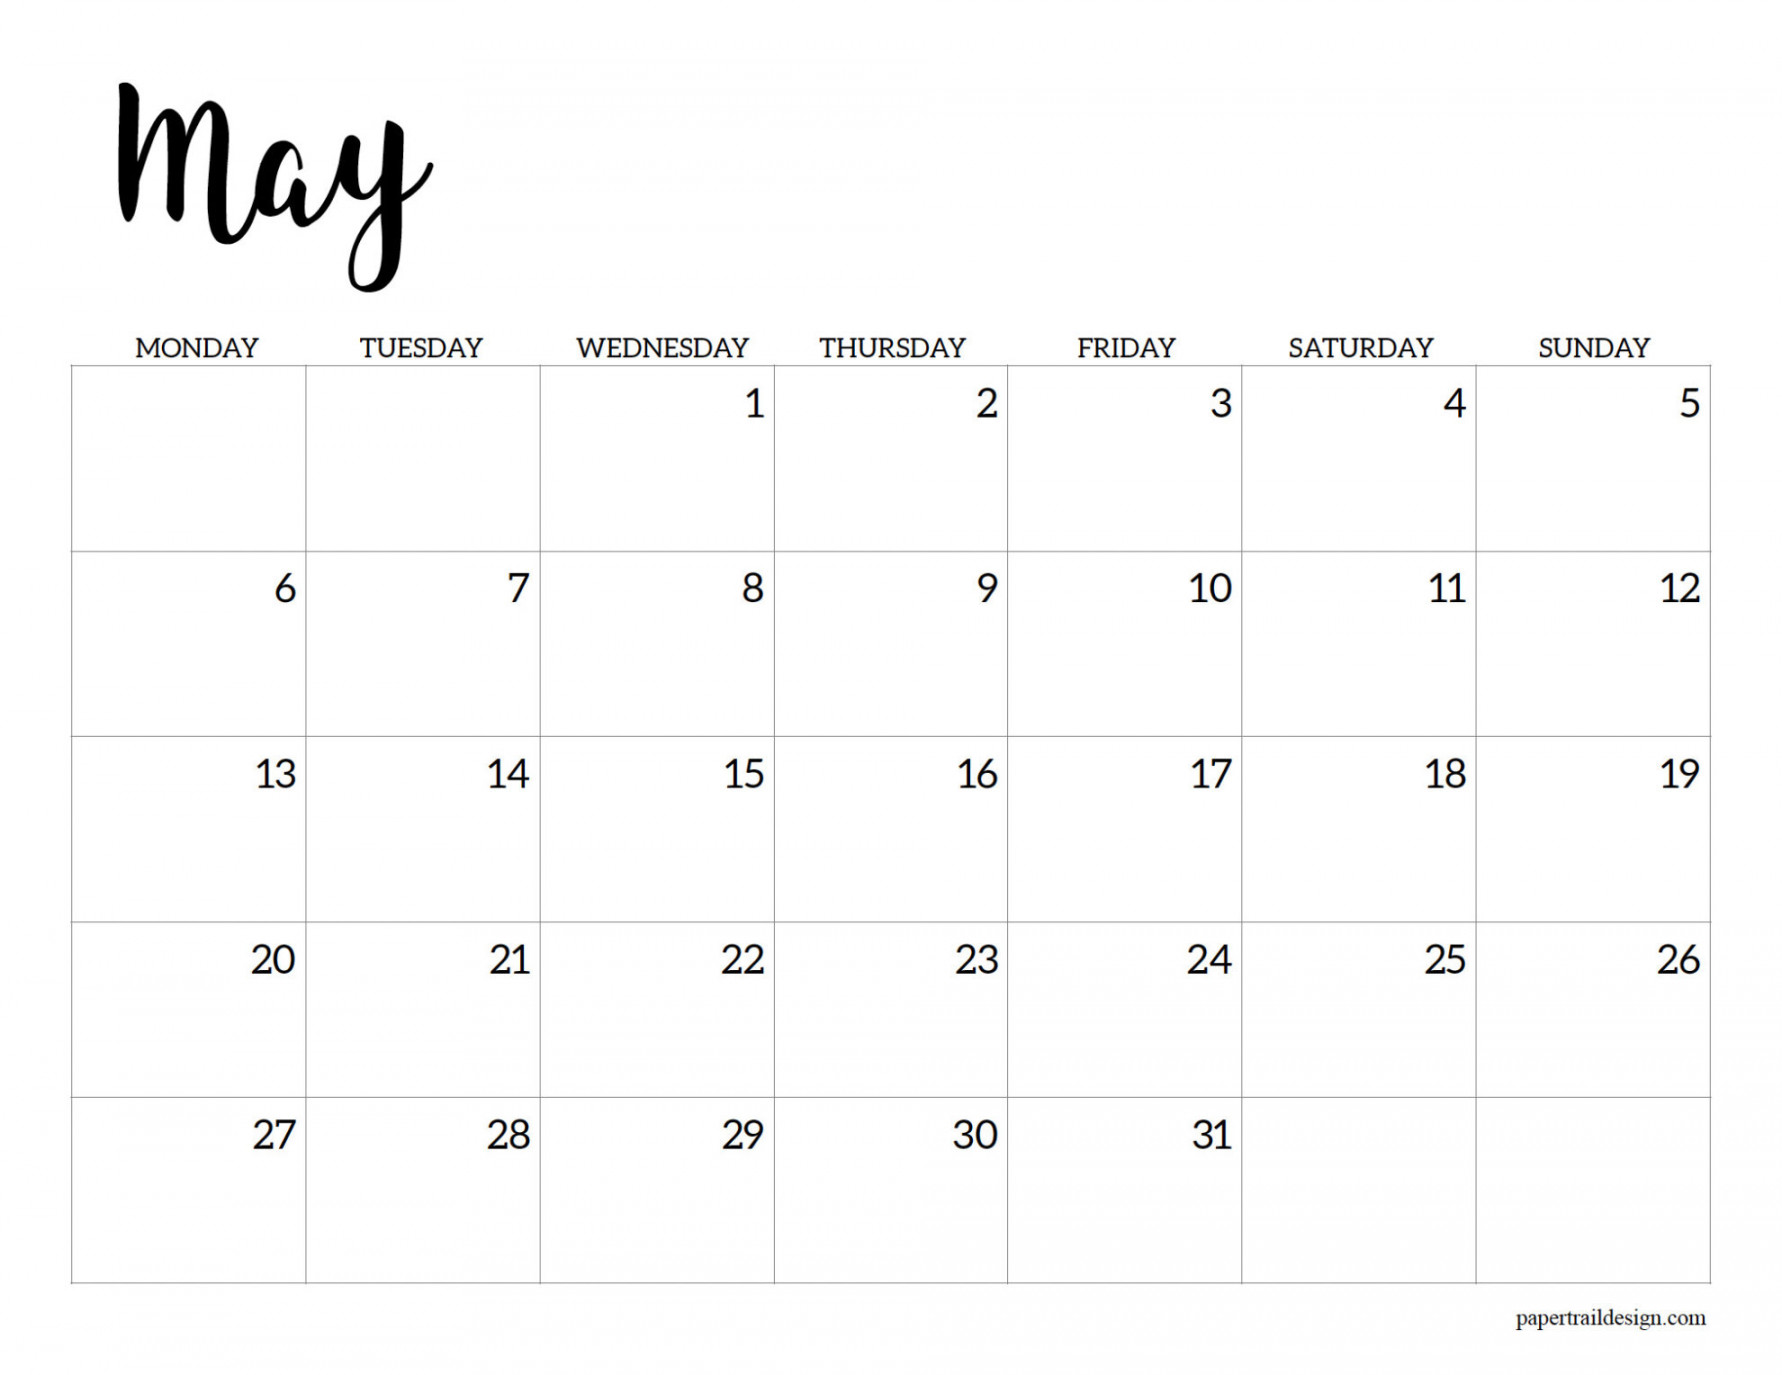 Free Printable  Calendar – Monday Start - Paper Trail Design